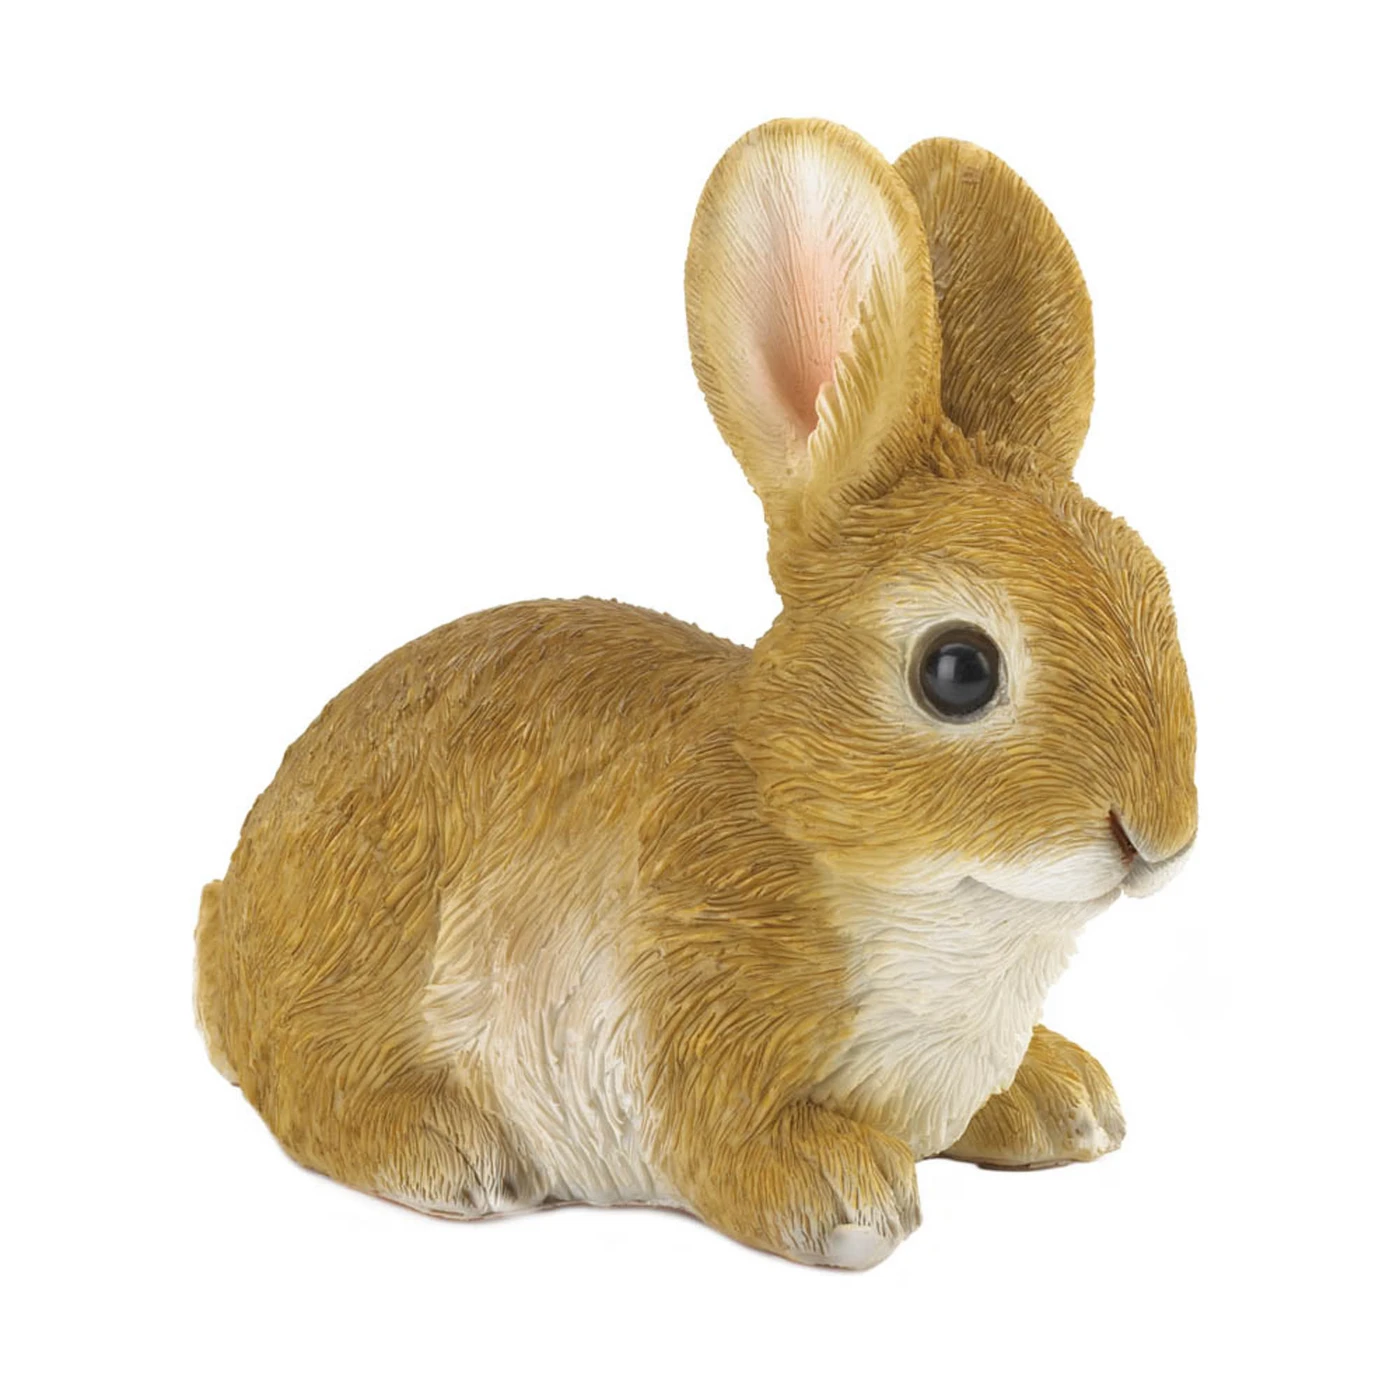 Vivid Bunny Figurine - $24.97